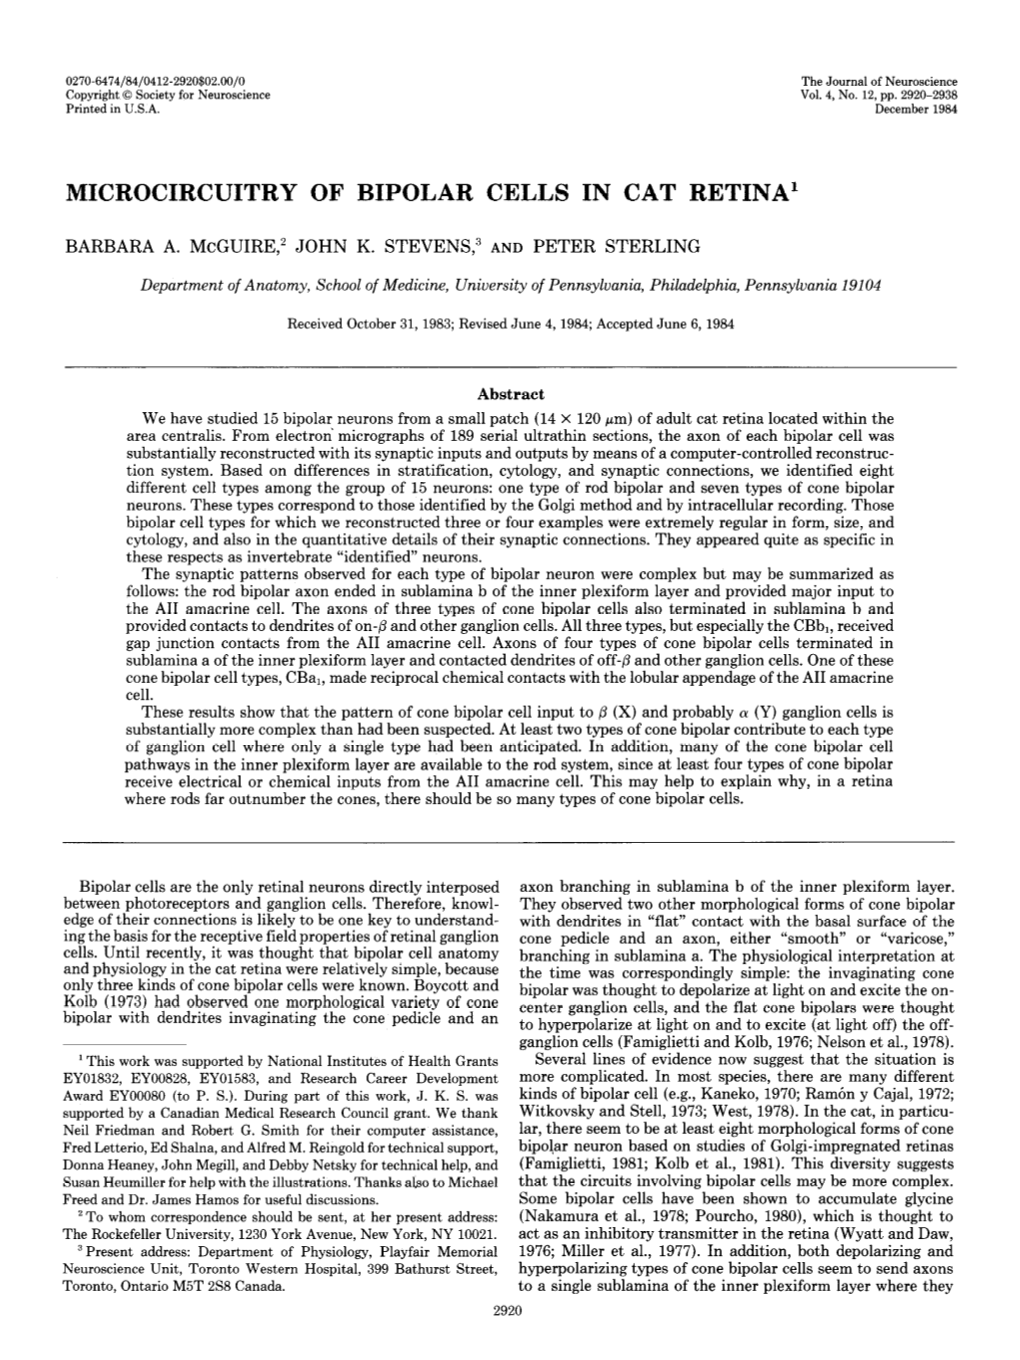 Microcircuitry of Bipolar Cells in Cat Retina1